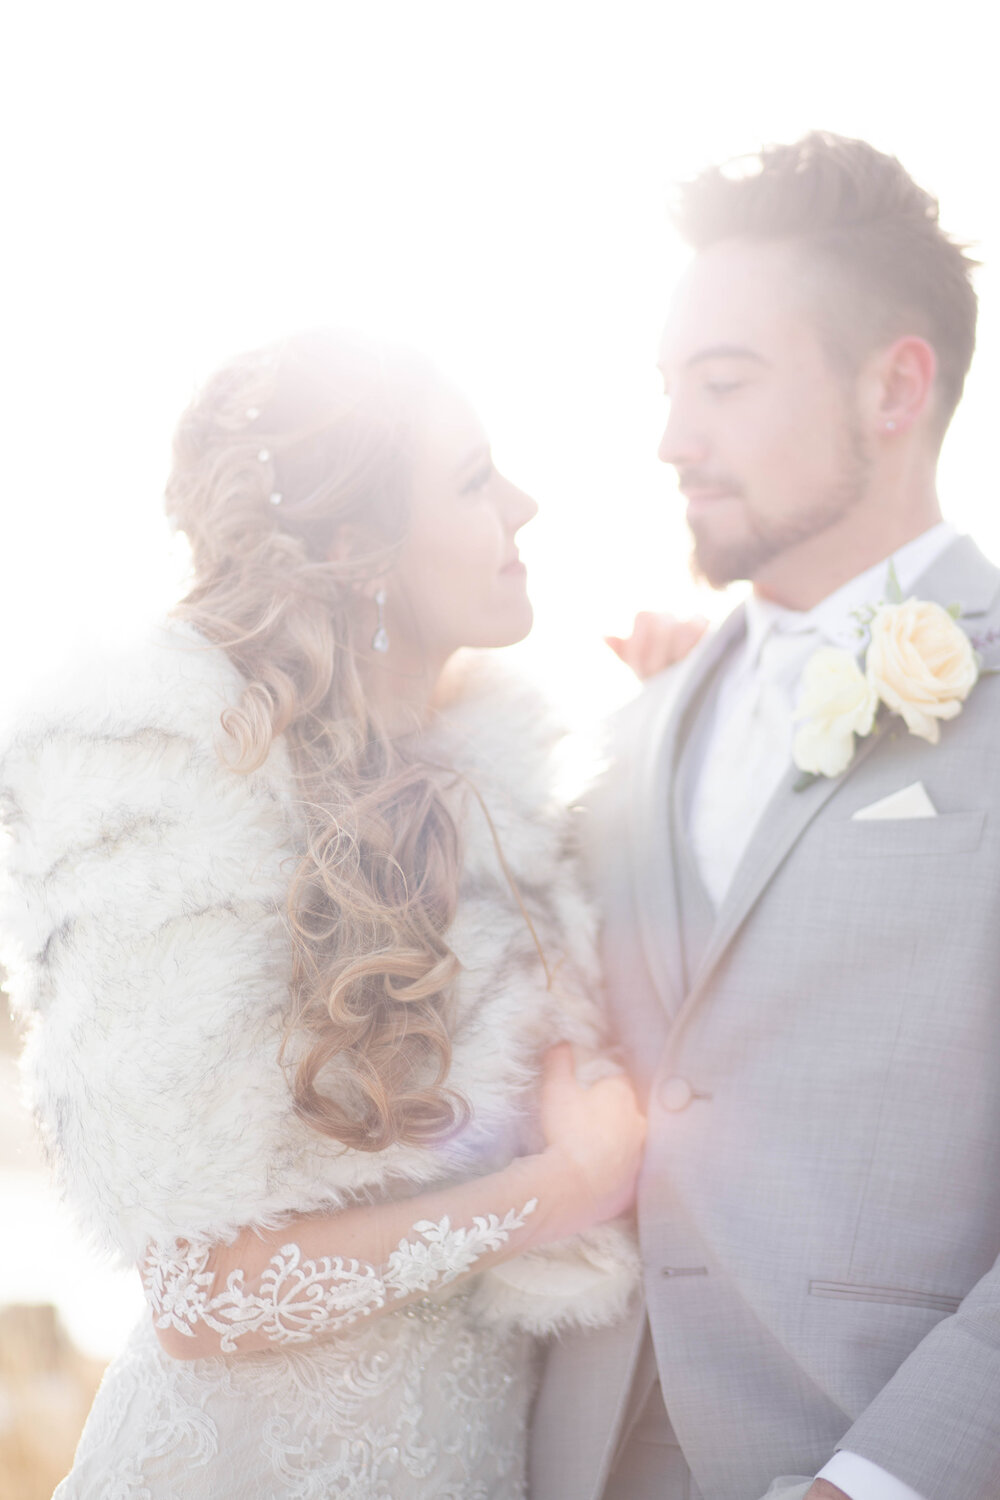 A subtle light leak during bride and groom wedding portraits